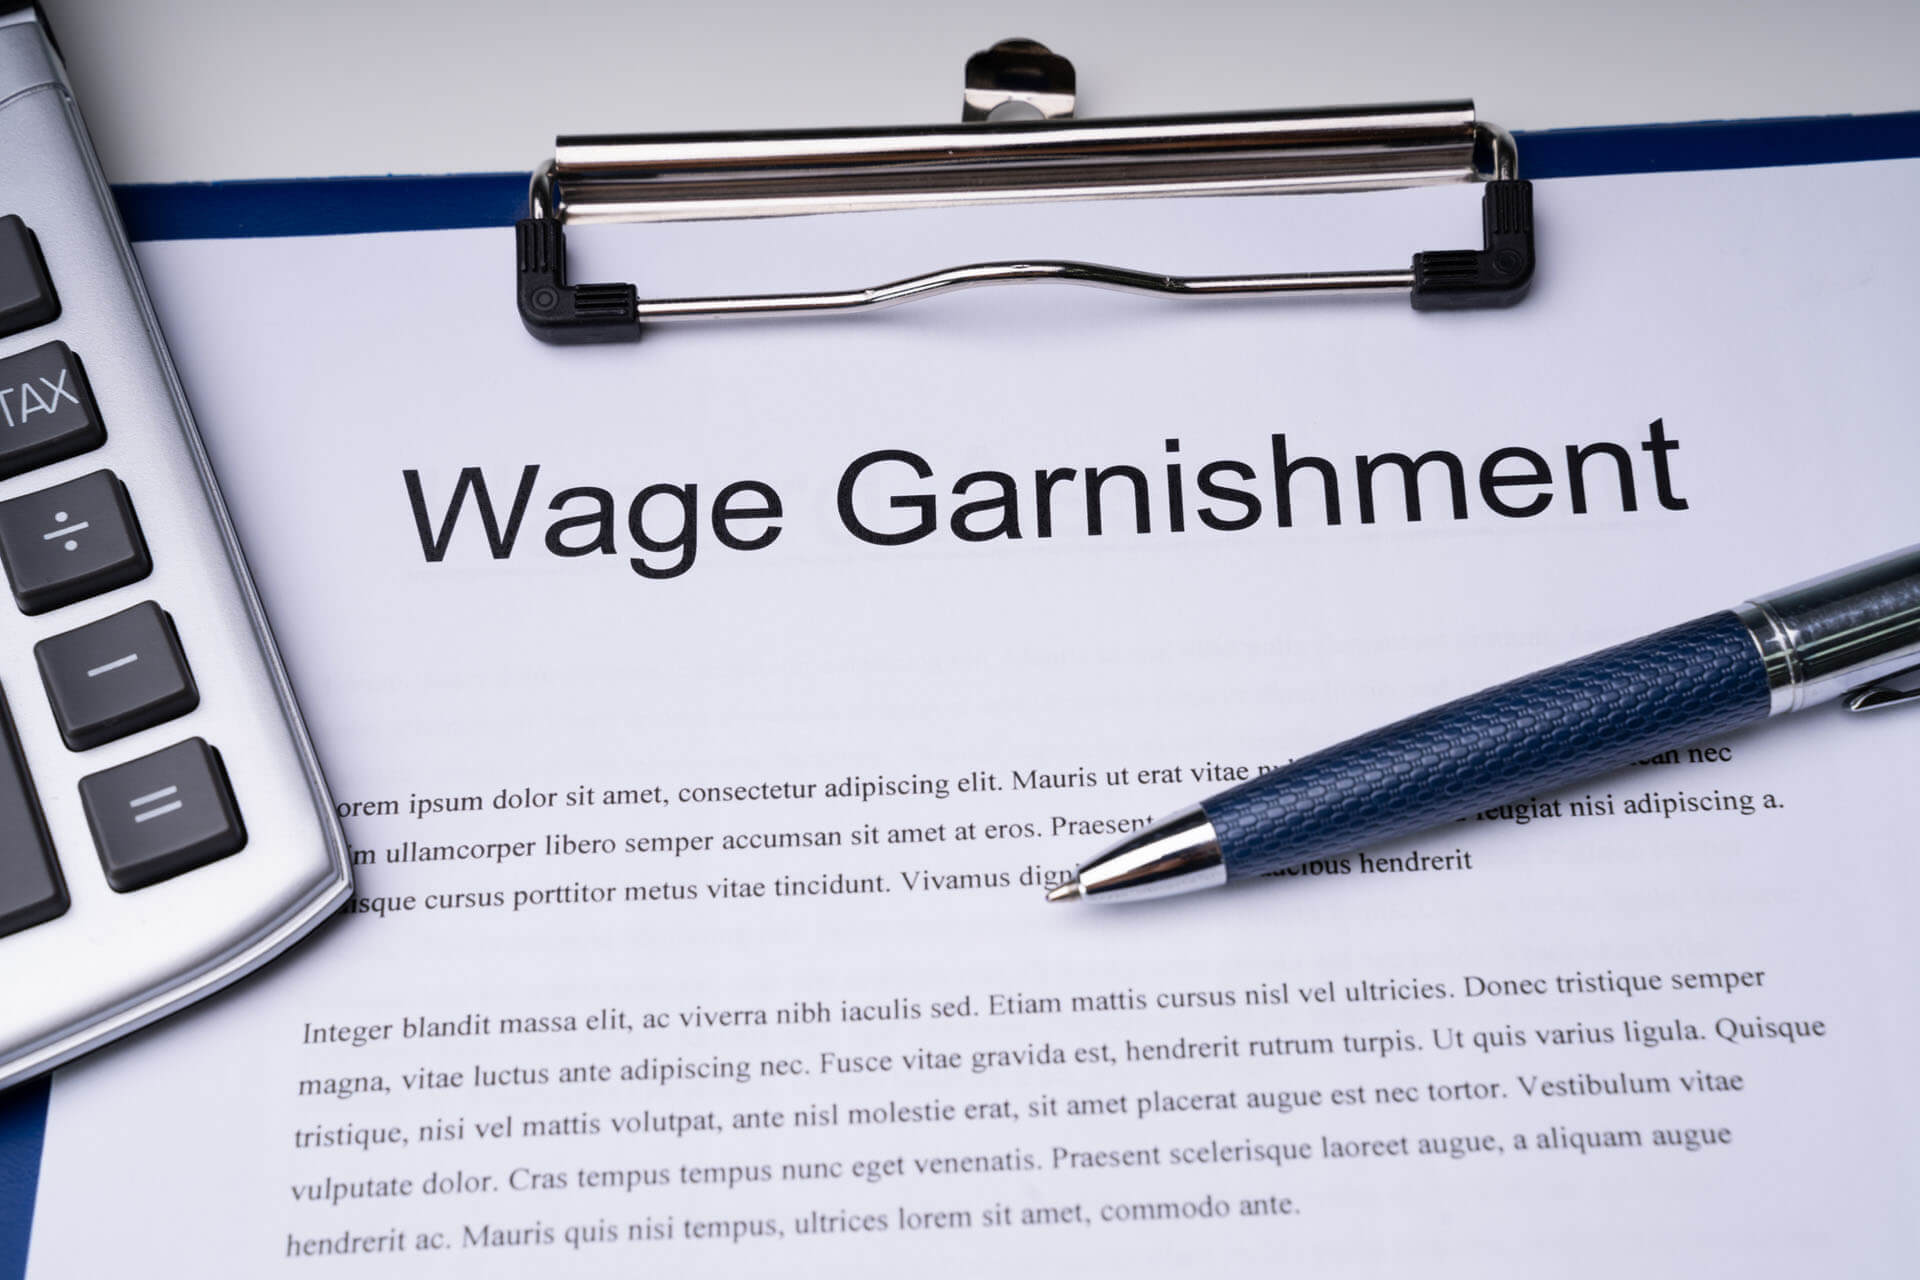 Avoid wage garnishment in Santa Rosa, CA.